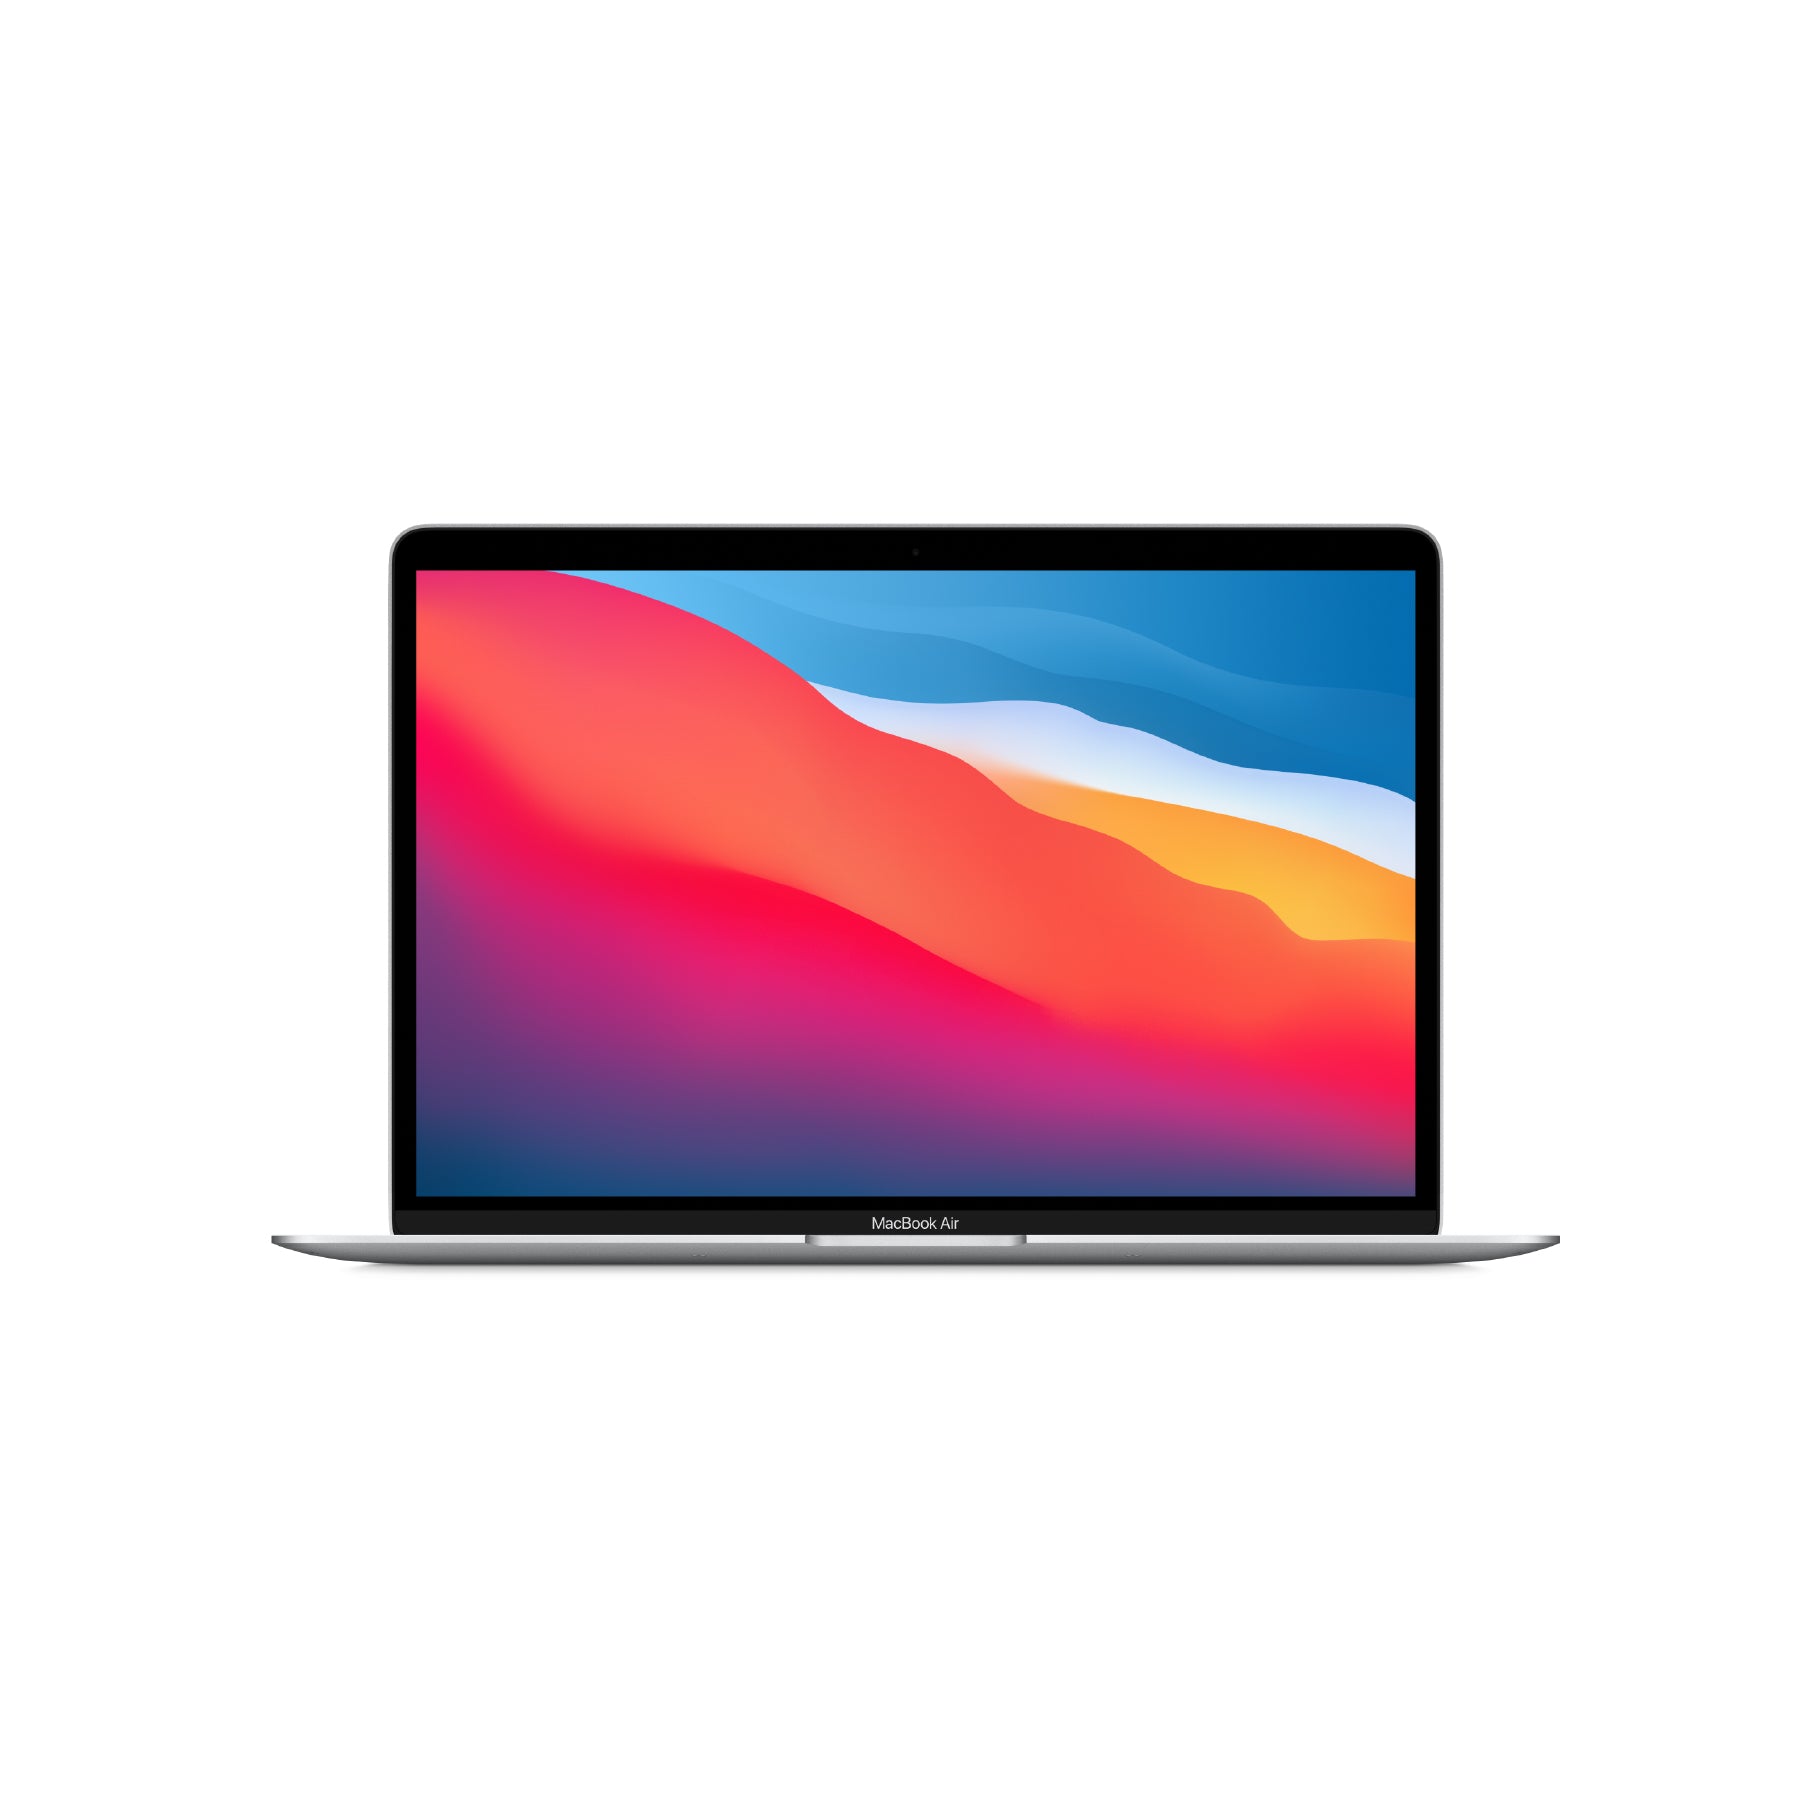 MacBook Air (13-inch, M1, 2020) 256GB - Silver (Best) - iStore Pre-owned